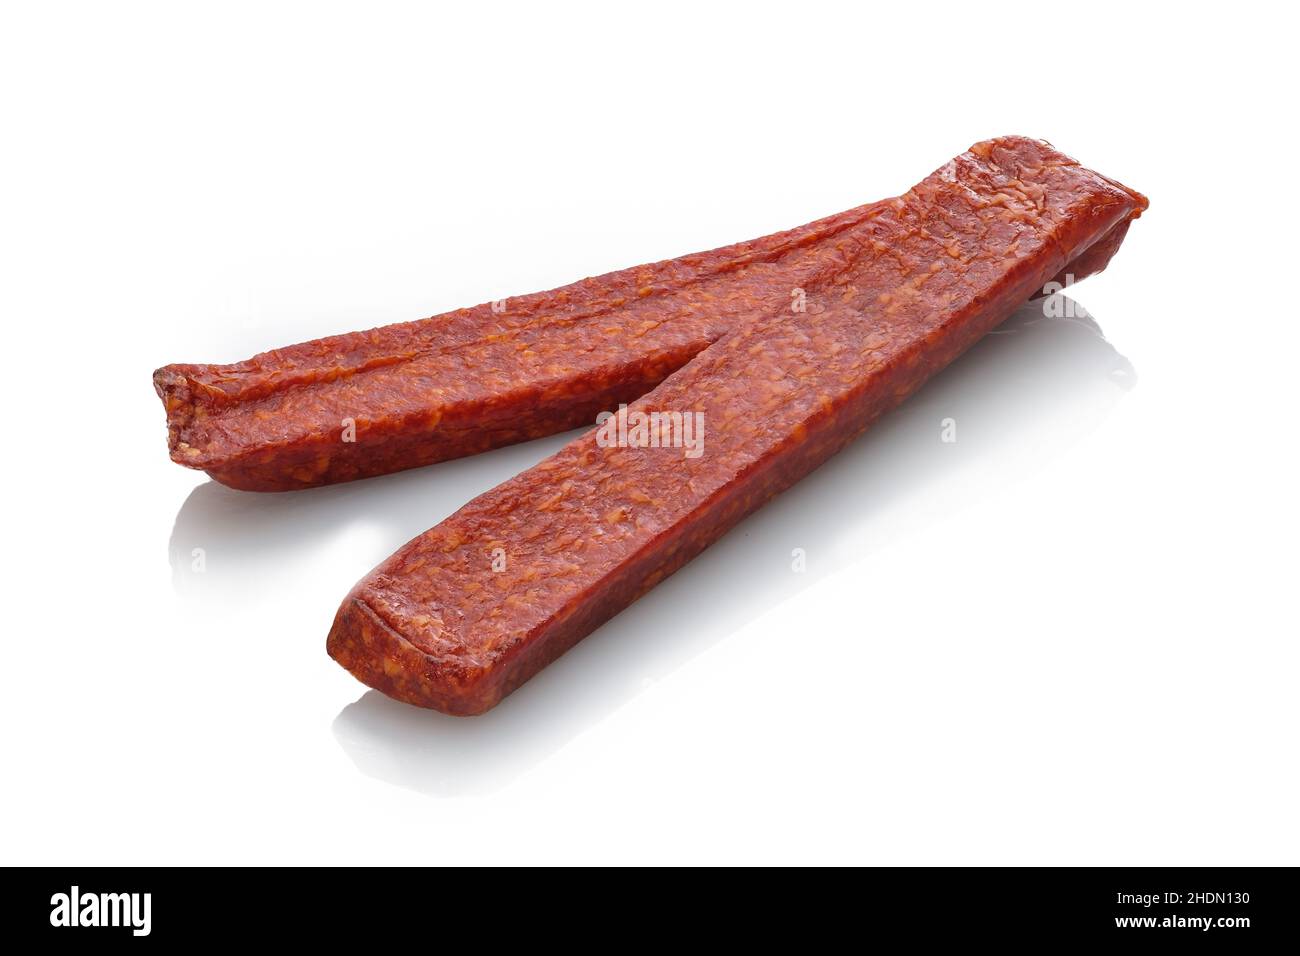 saussages, sausage Stock Photo